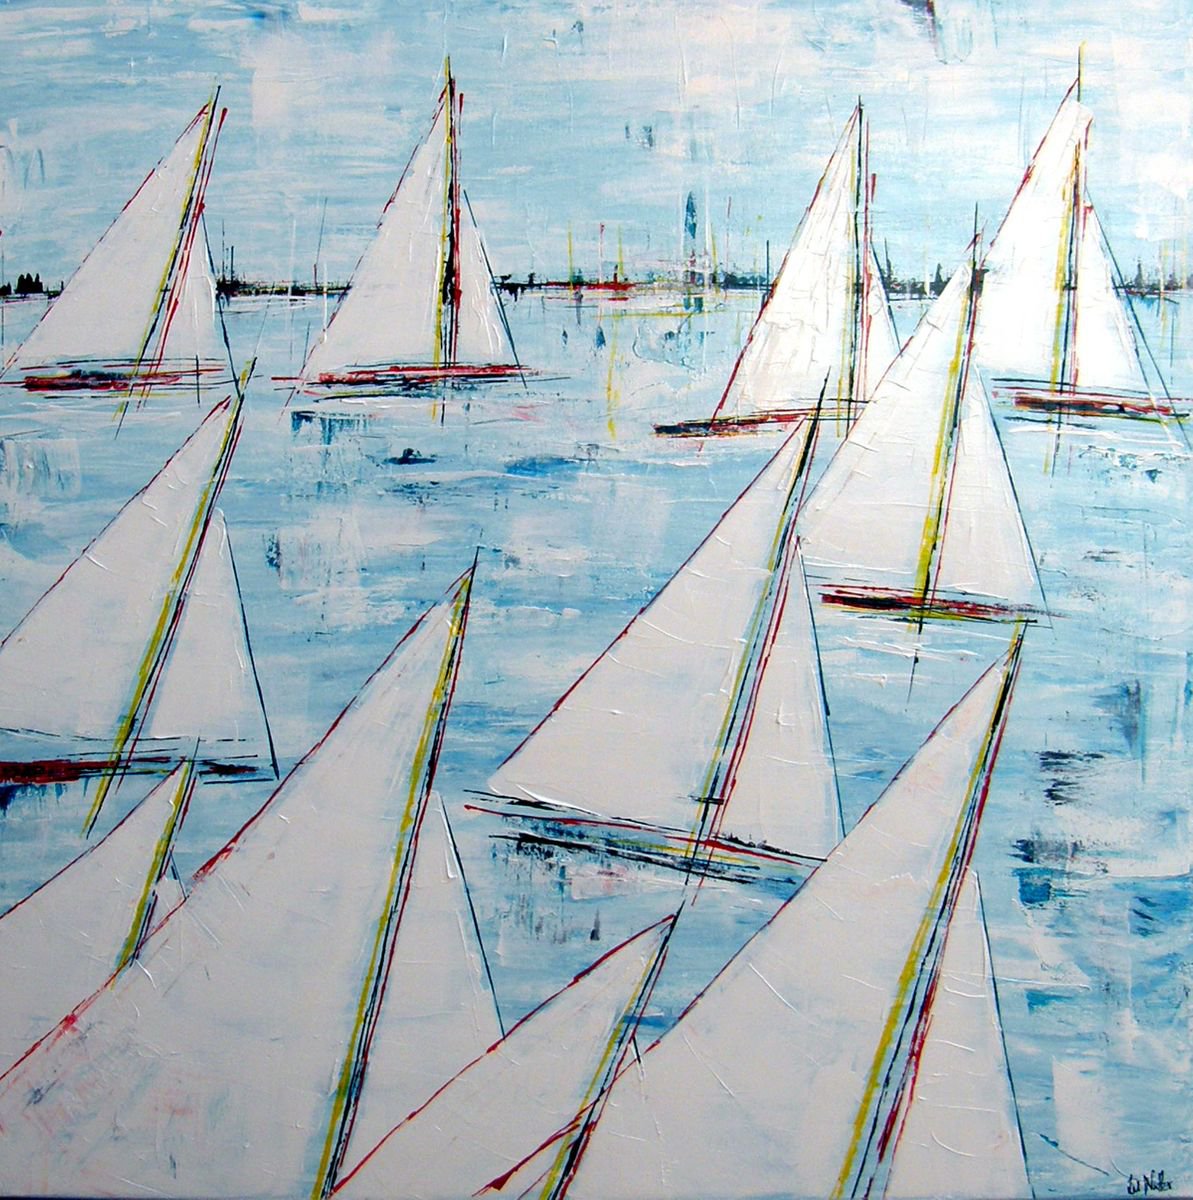 Solent Summer Sails 40x40 by Lil Nutter